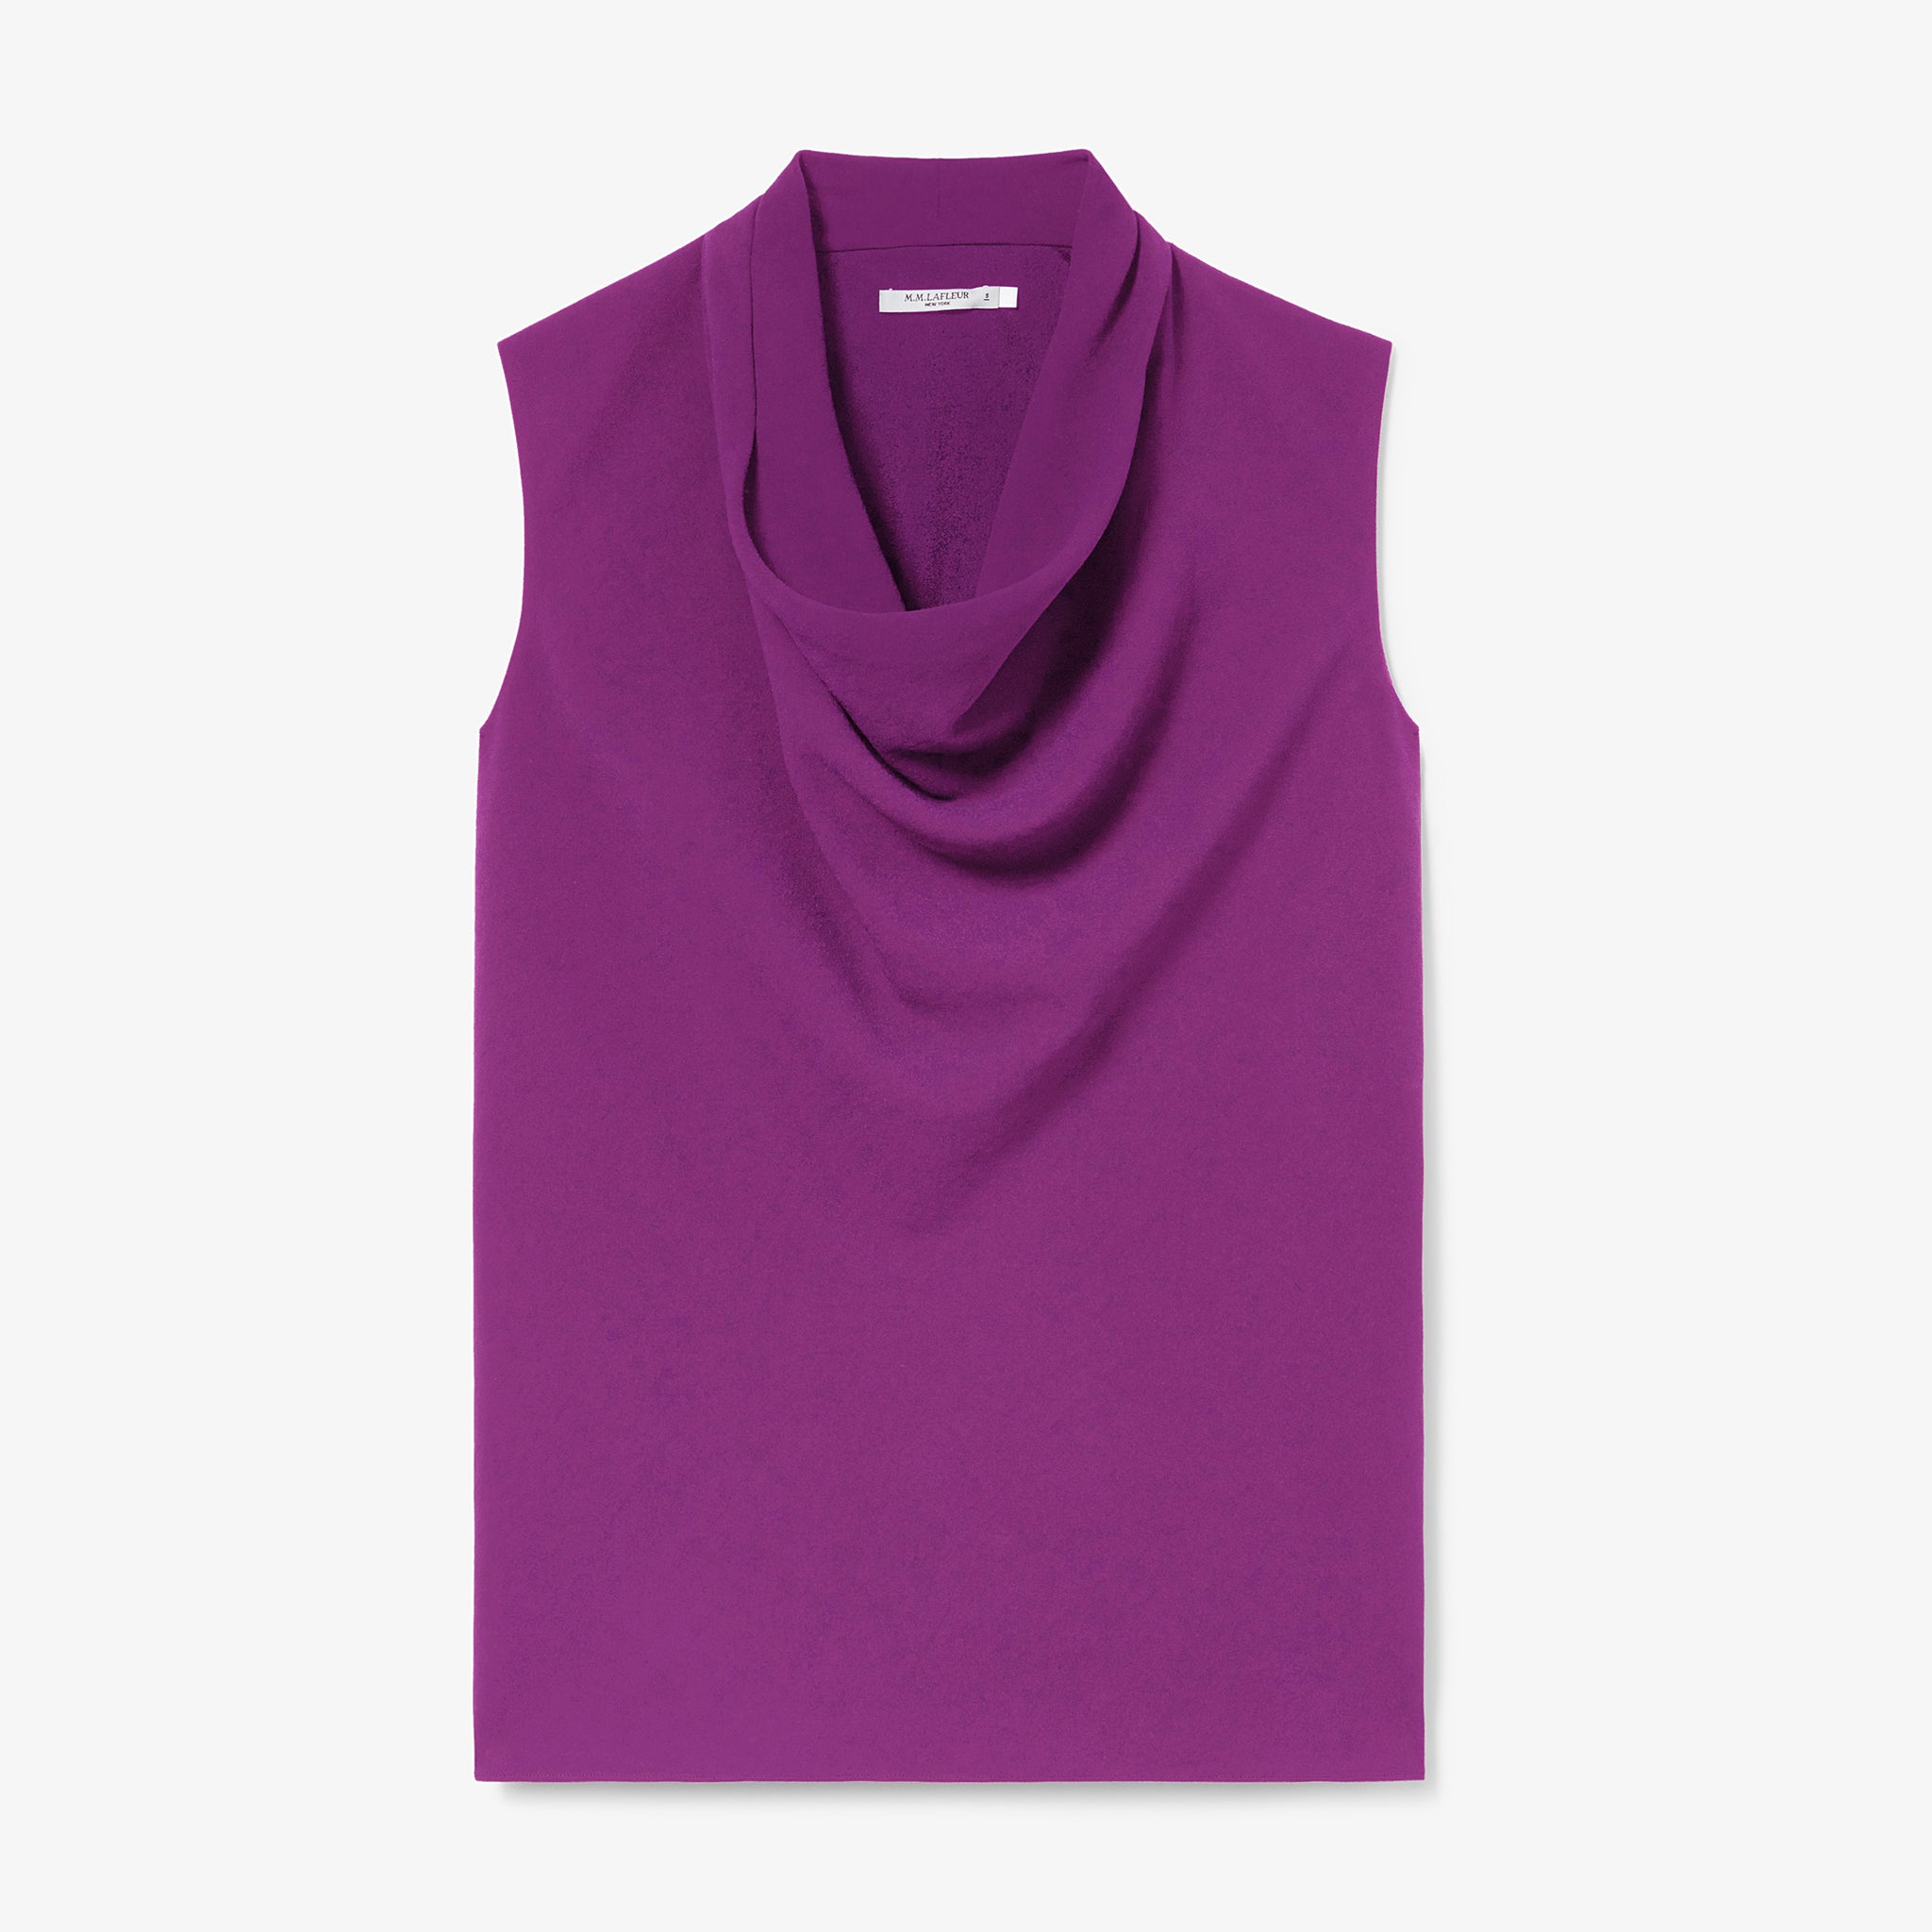 Packshot image of the Sloane top in purple jasper